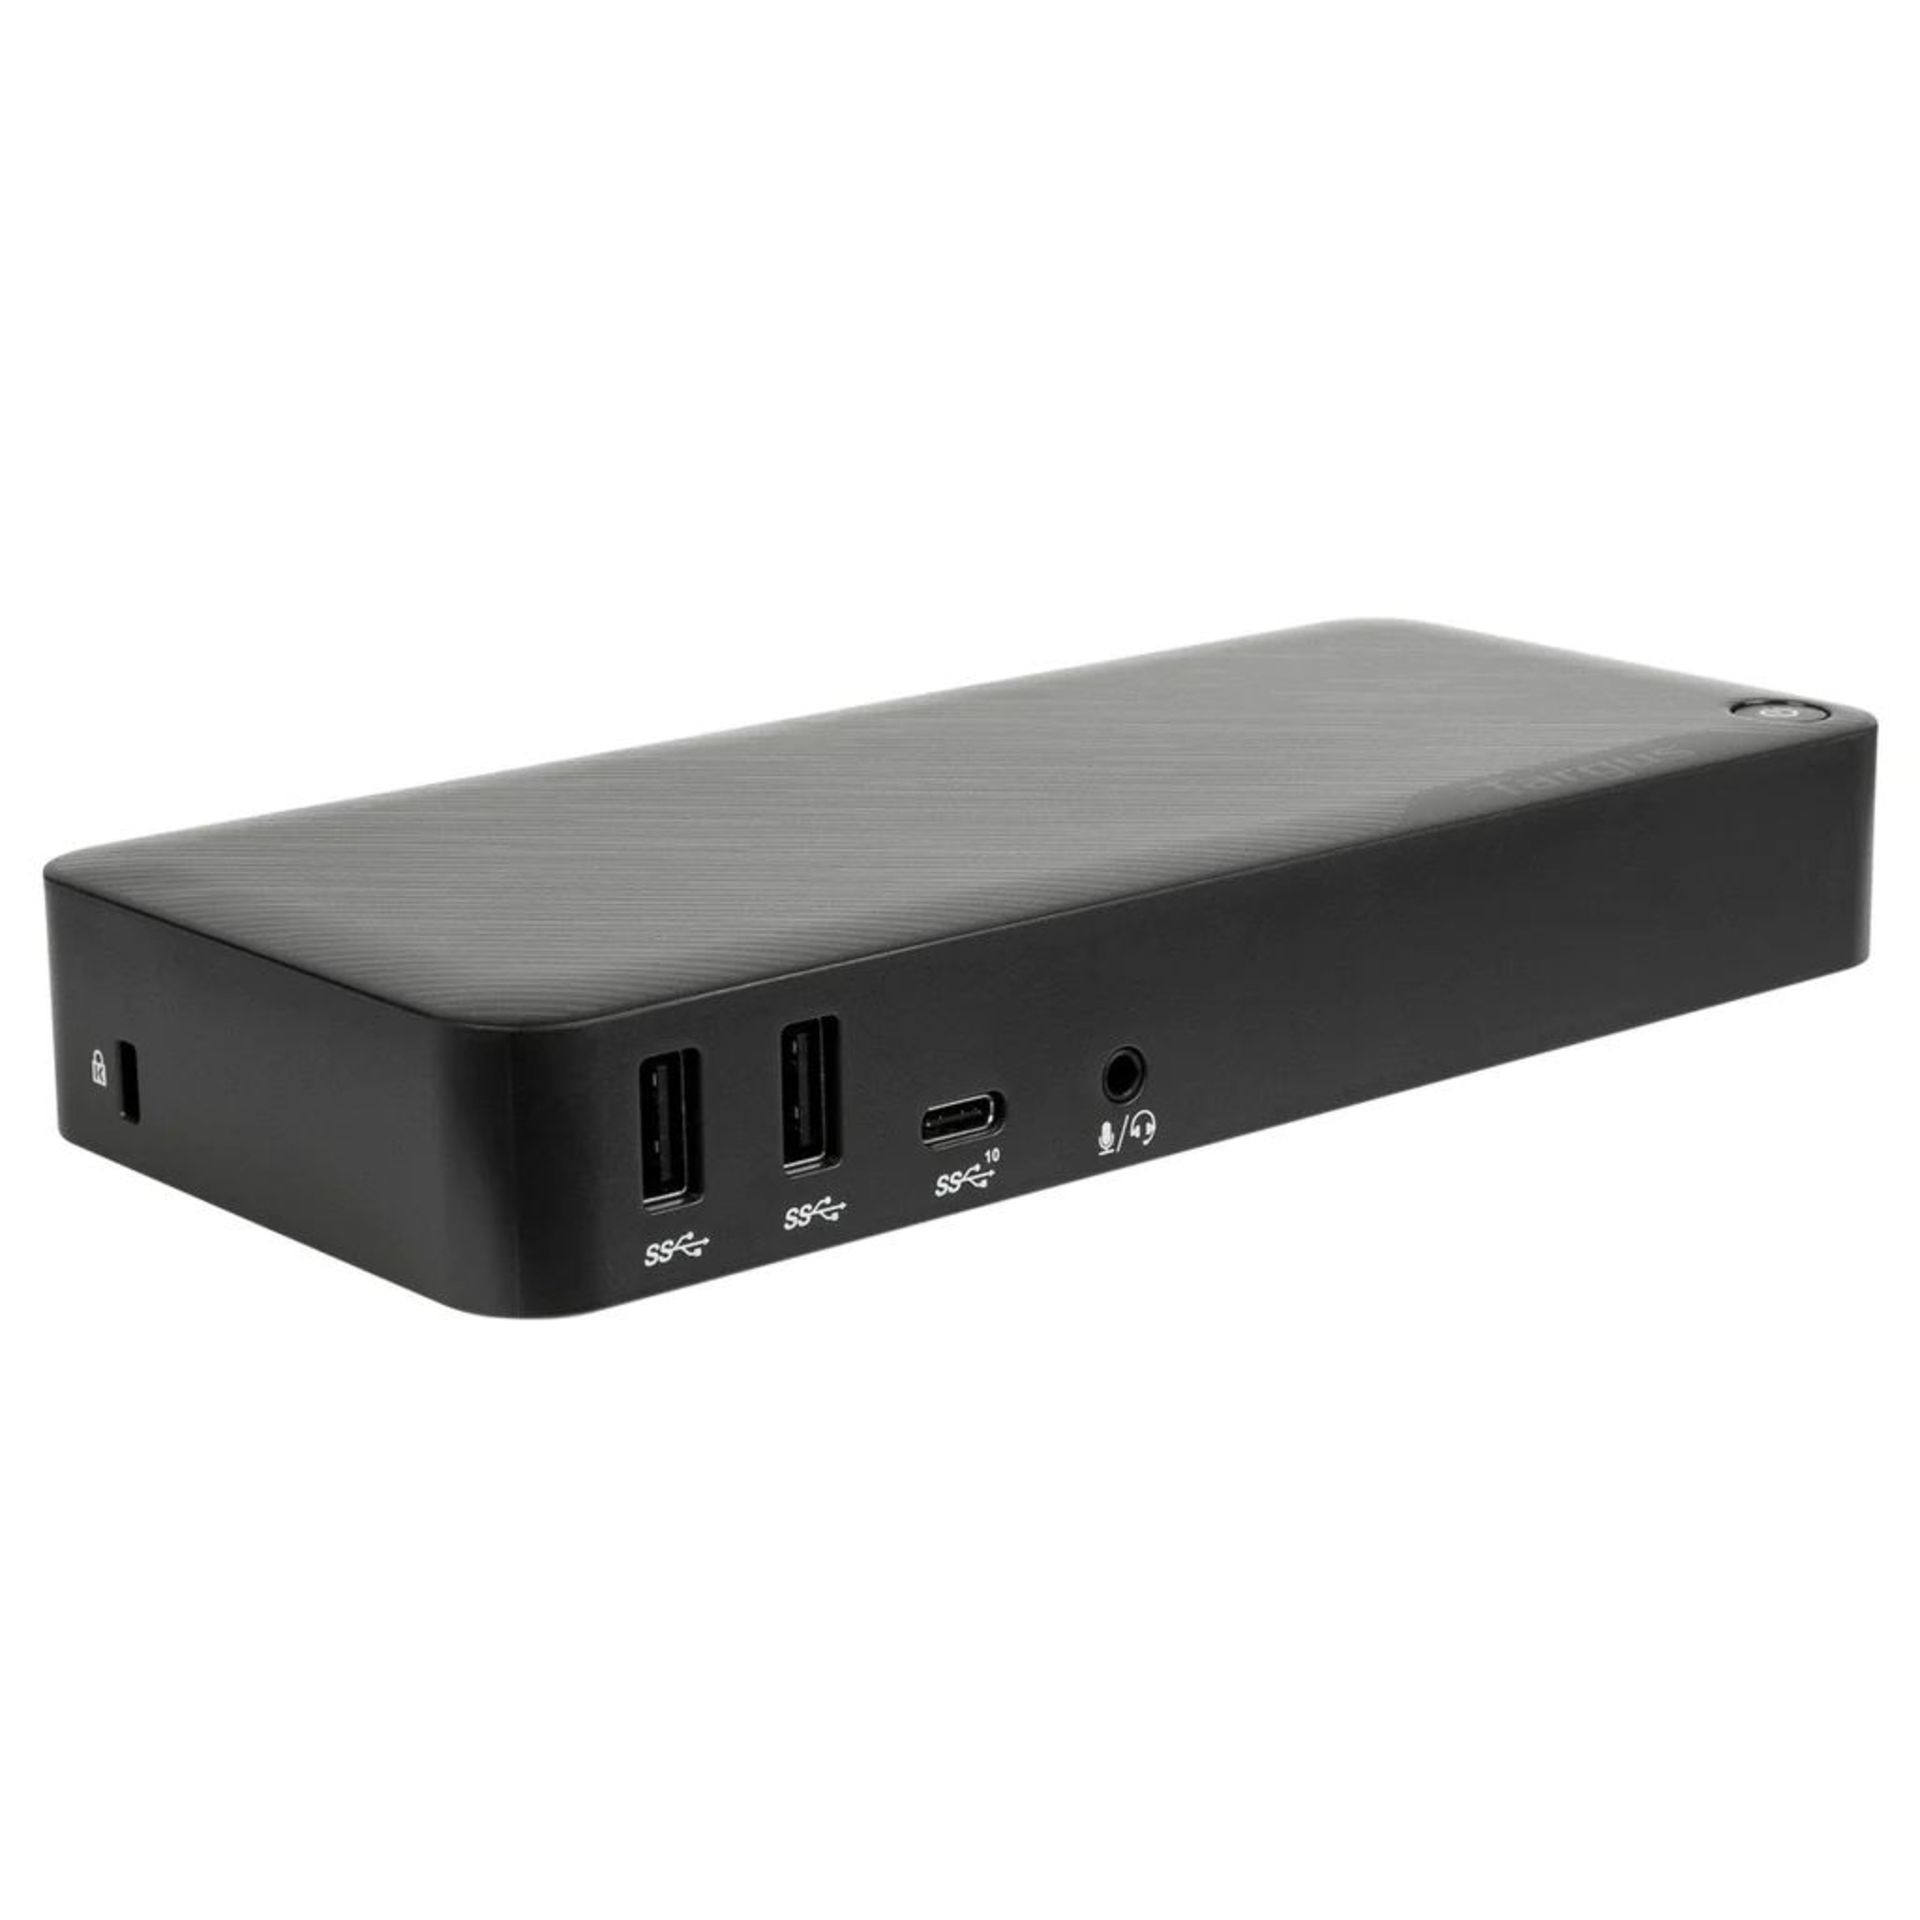 USB-C Multi-Function DisplayPort Alt. Mode Docking Station with 85W Power. -P1. RRP £350.00.